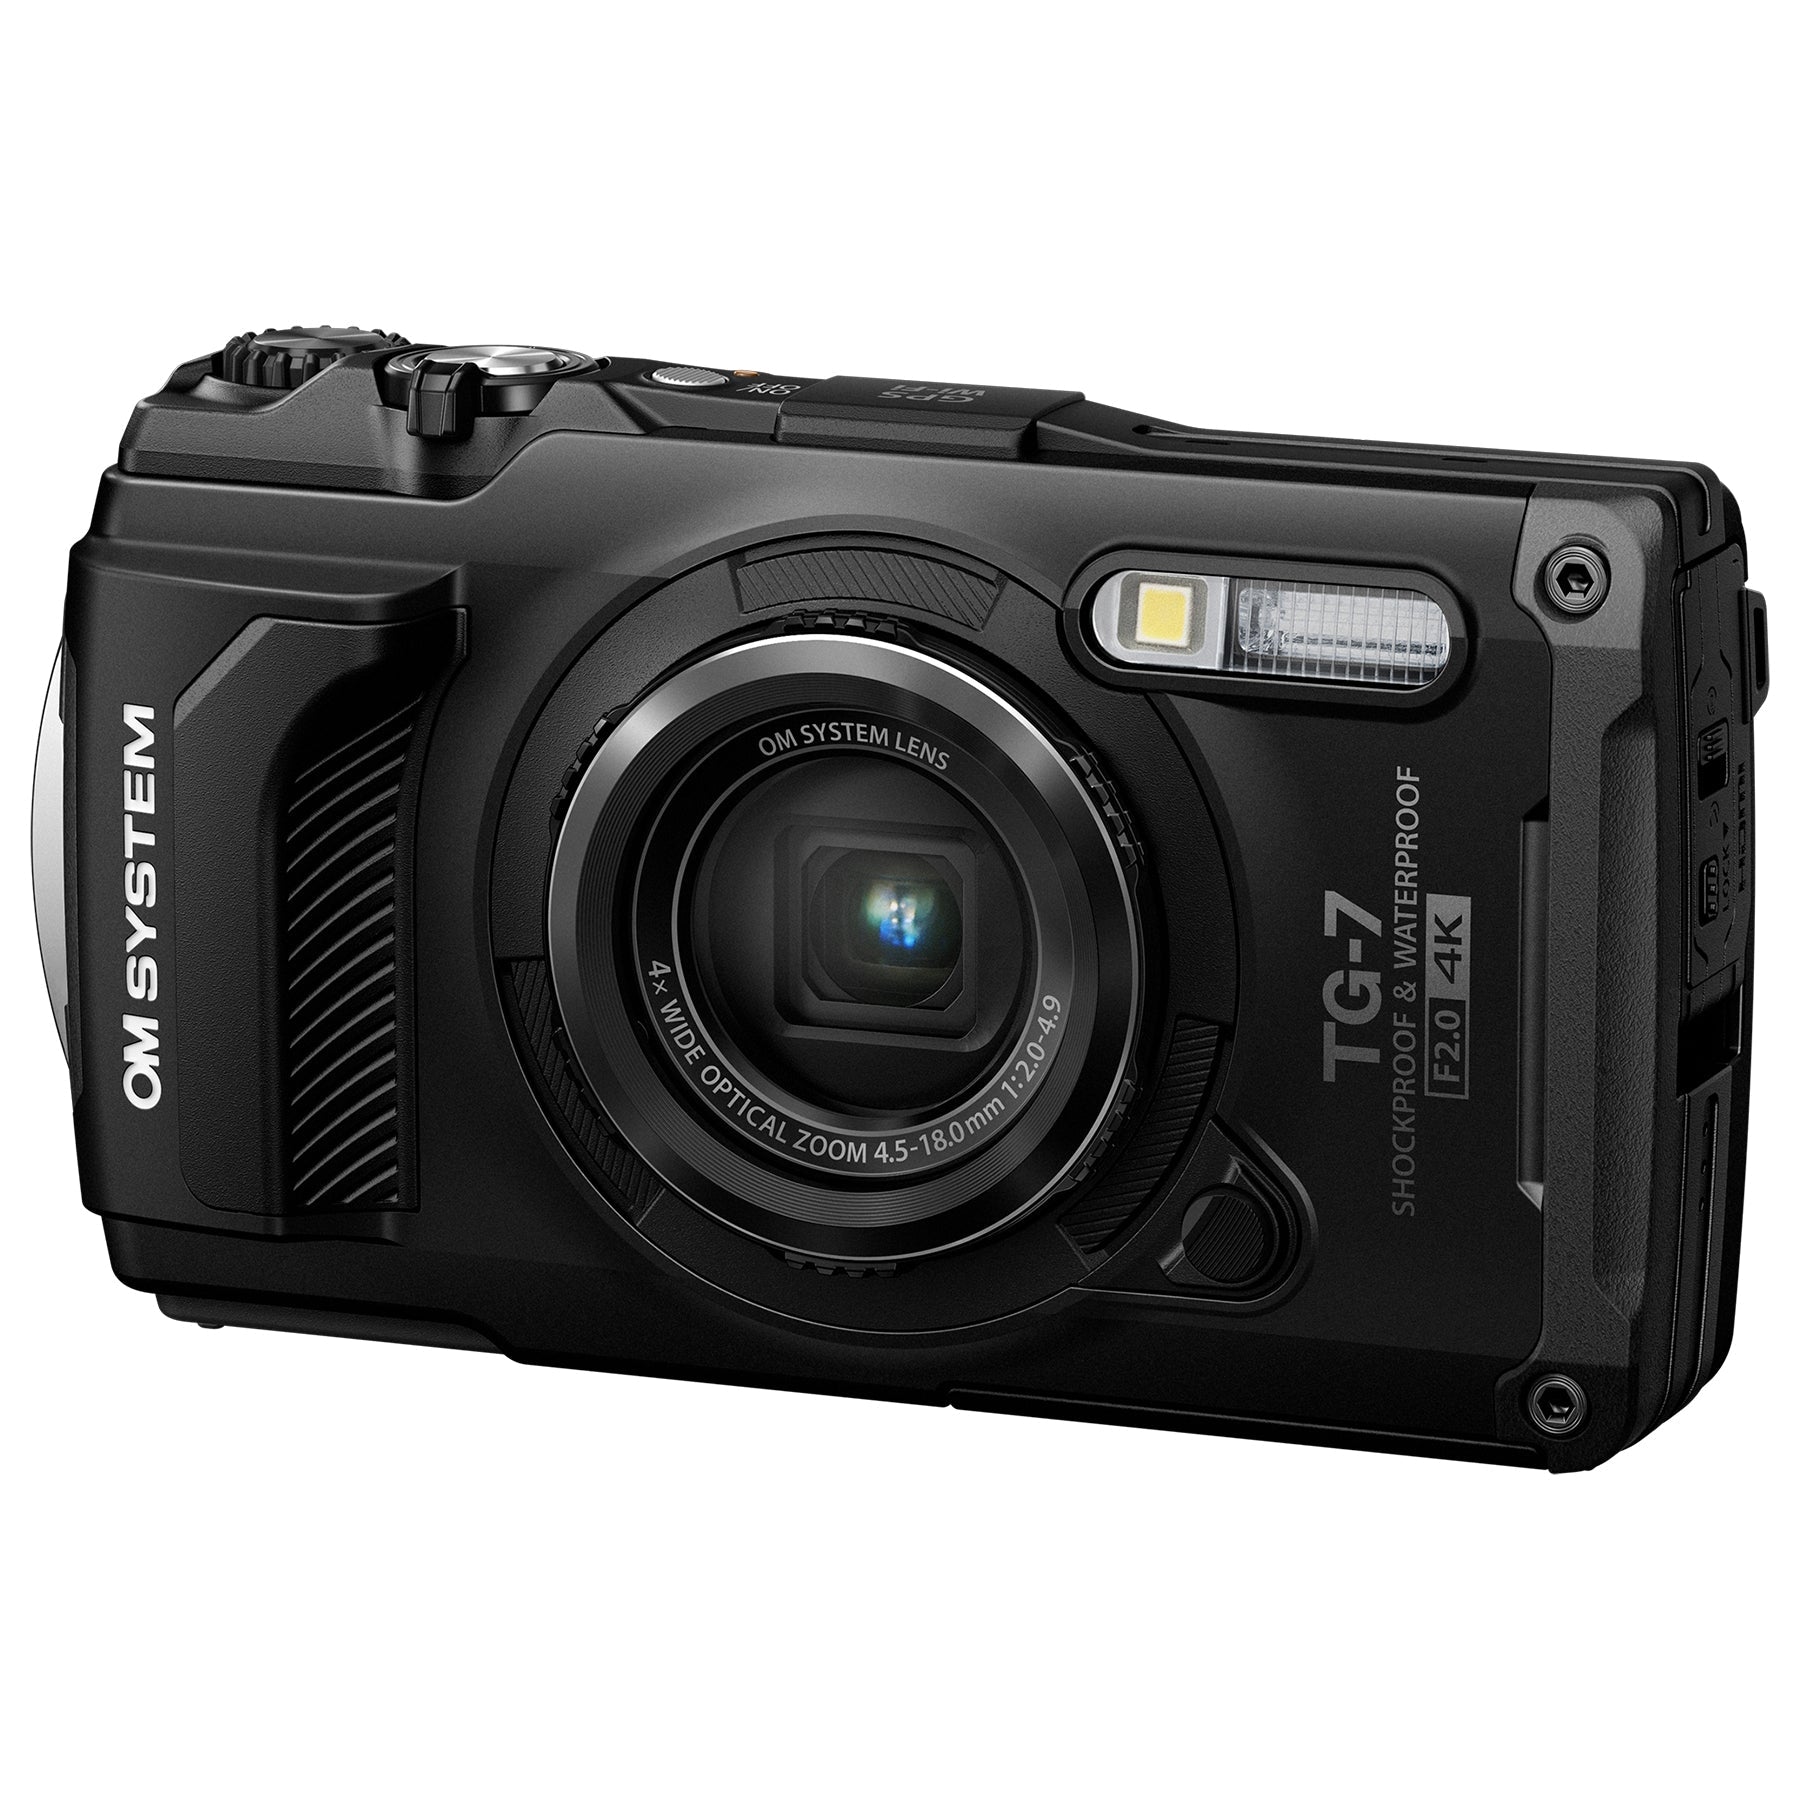 OM System TG-7 12MP 4x Zoom Tough Compact Camera (Black)